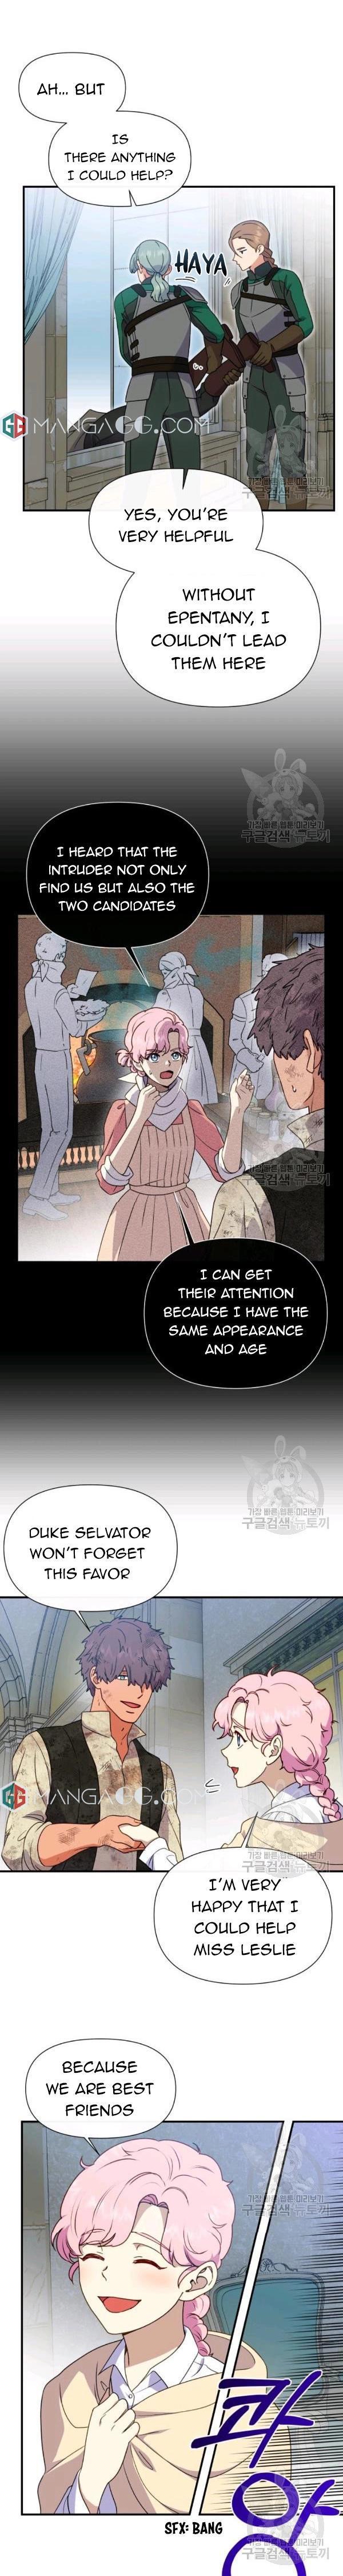 The Monster Duchess And Contract Princess Chapter 123 page 17 - Mangakakalot